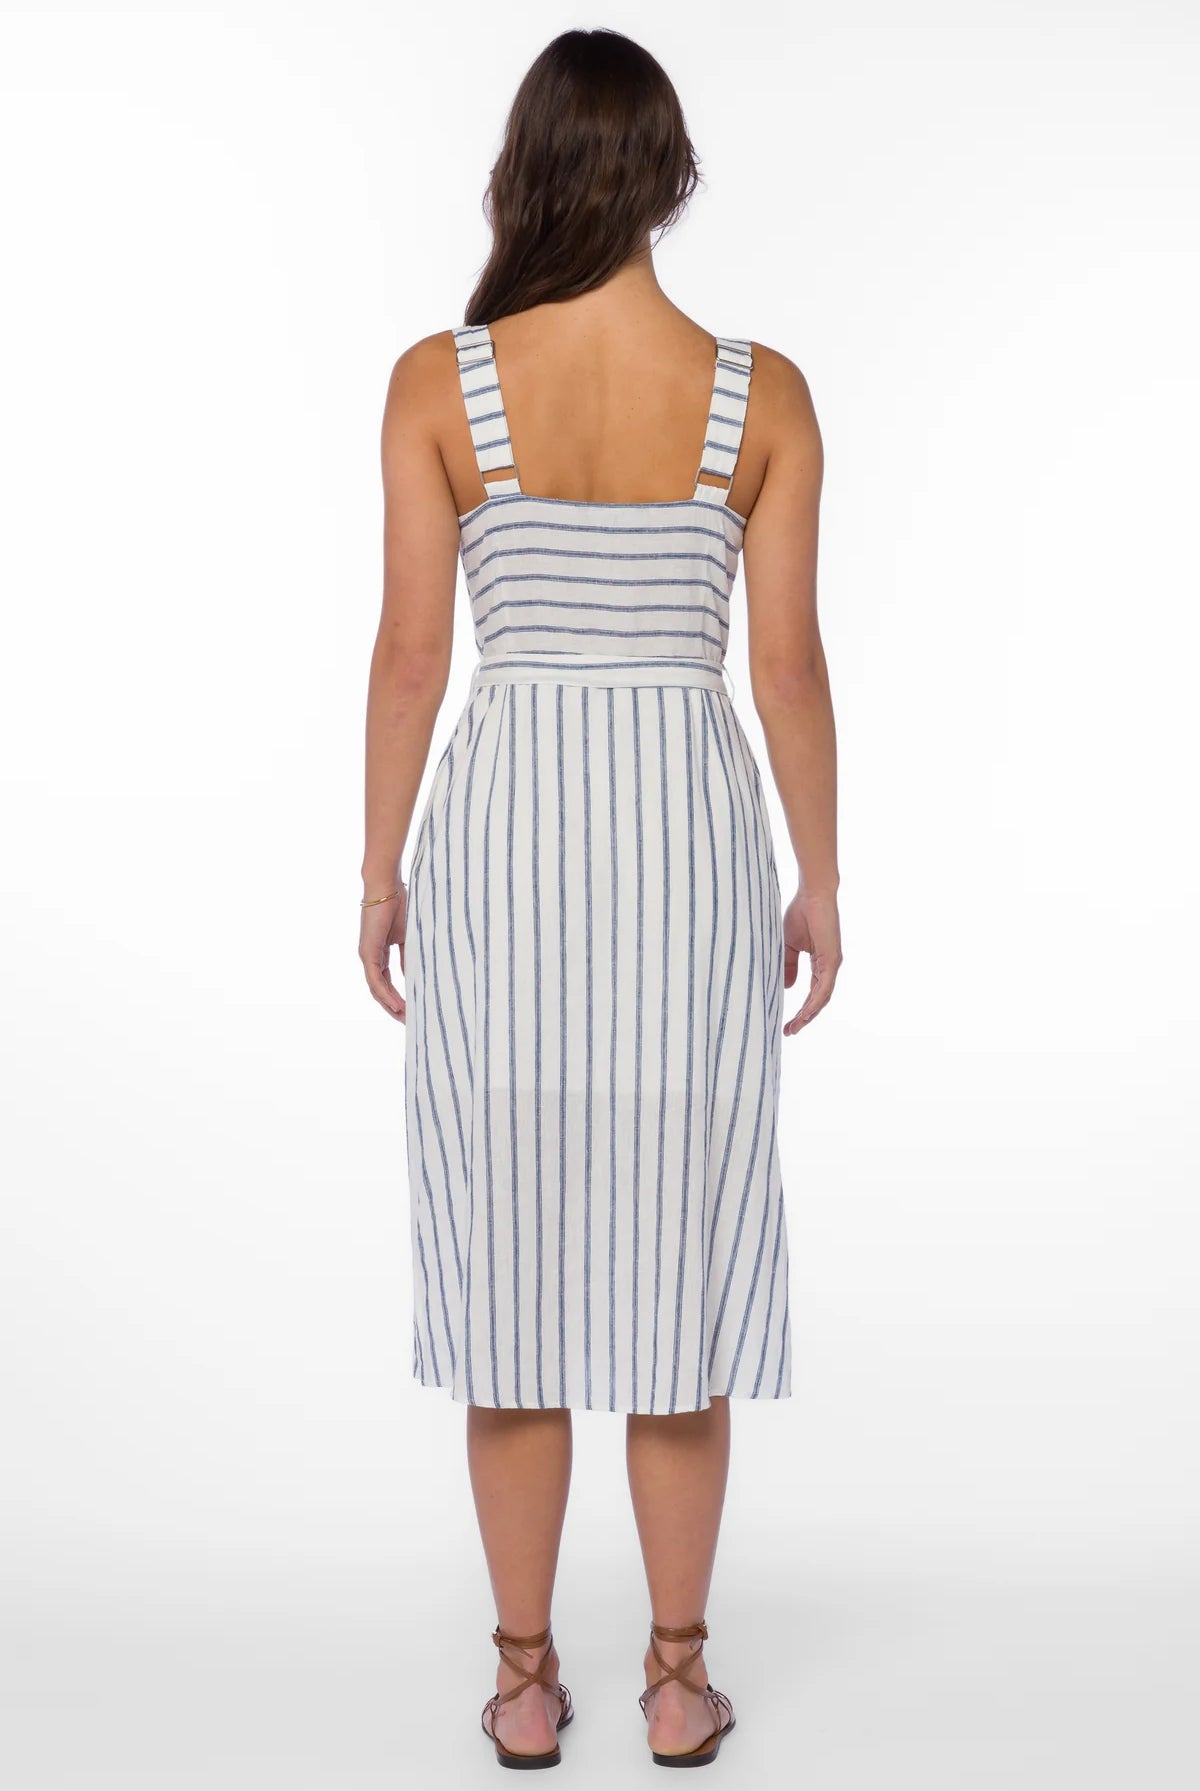 Navy Stripe Chevron Dress Apex Ethical Boutique